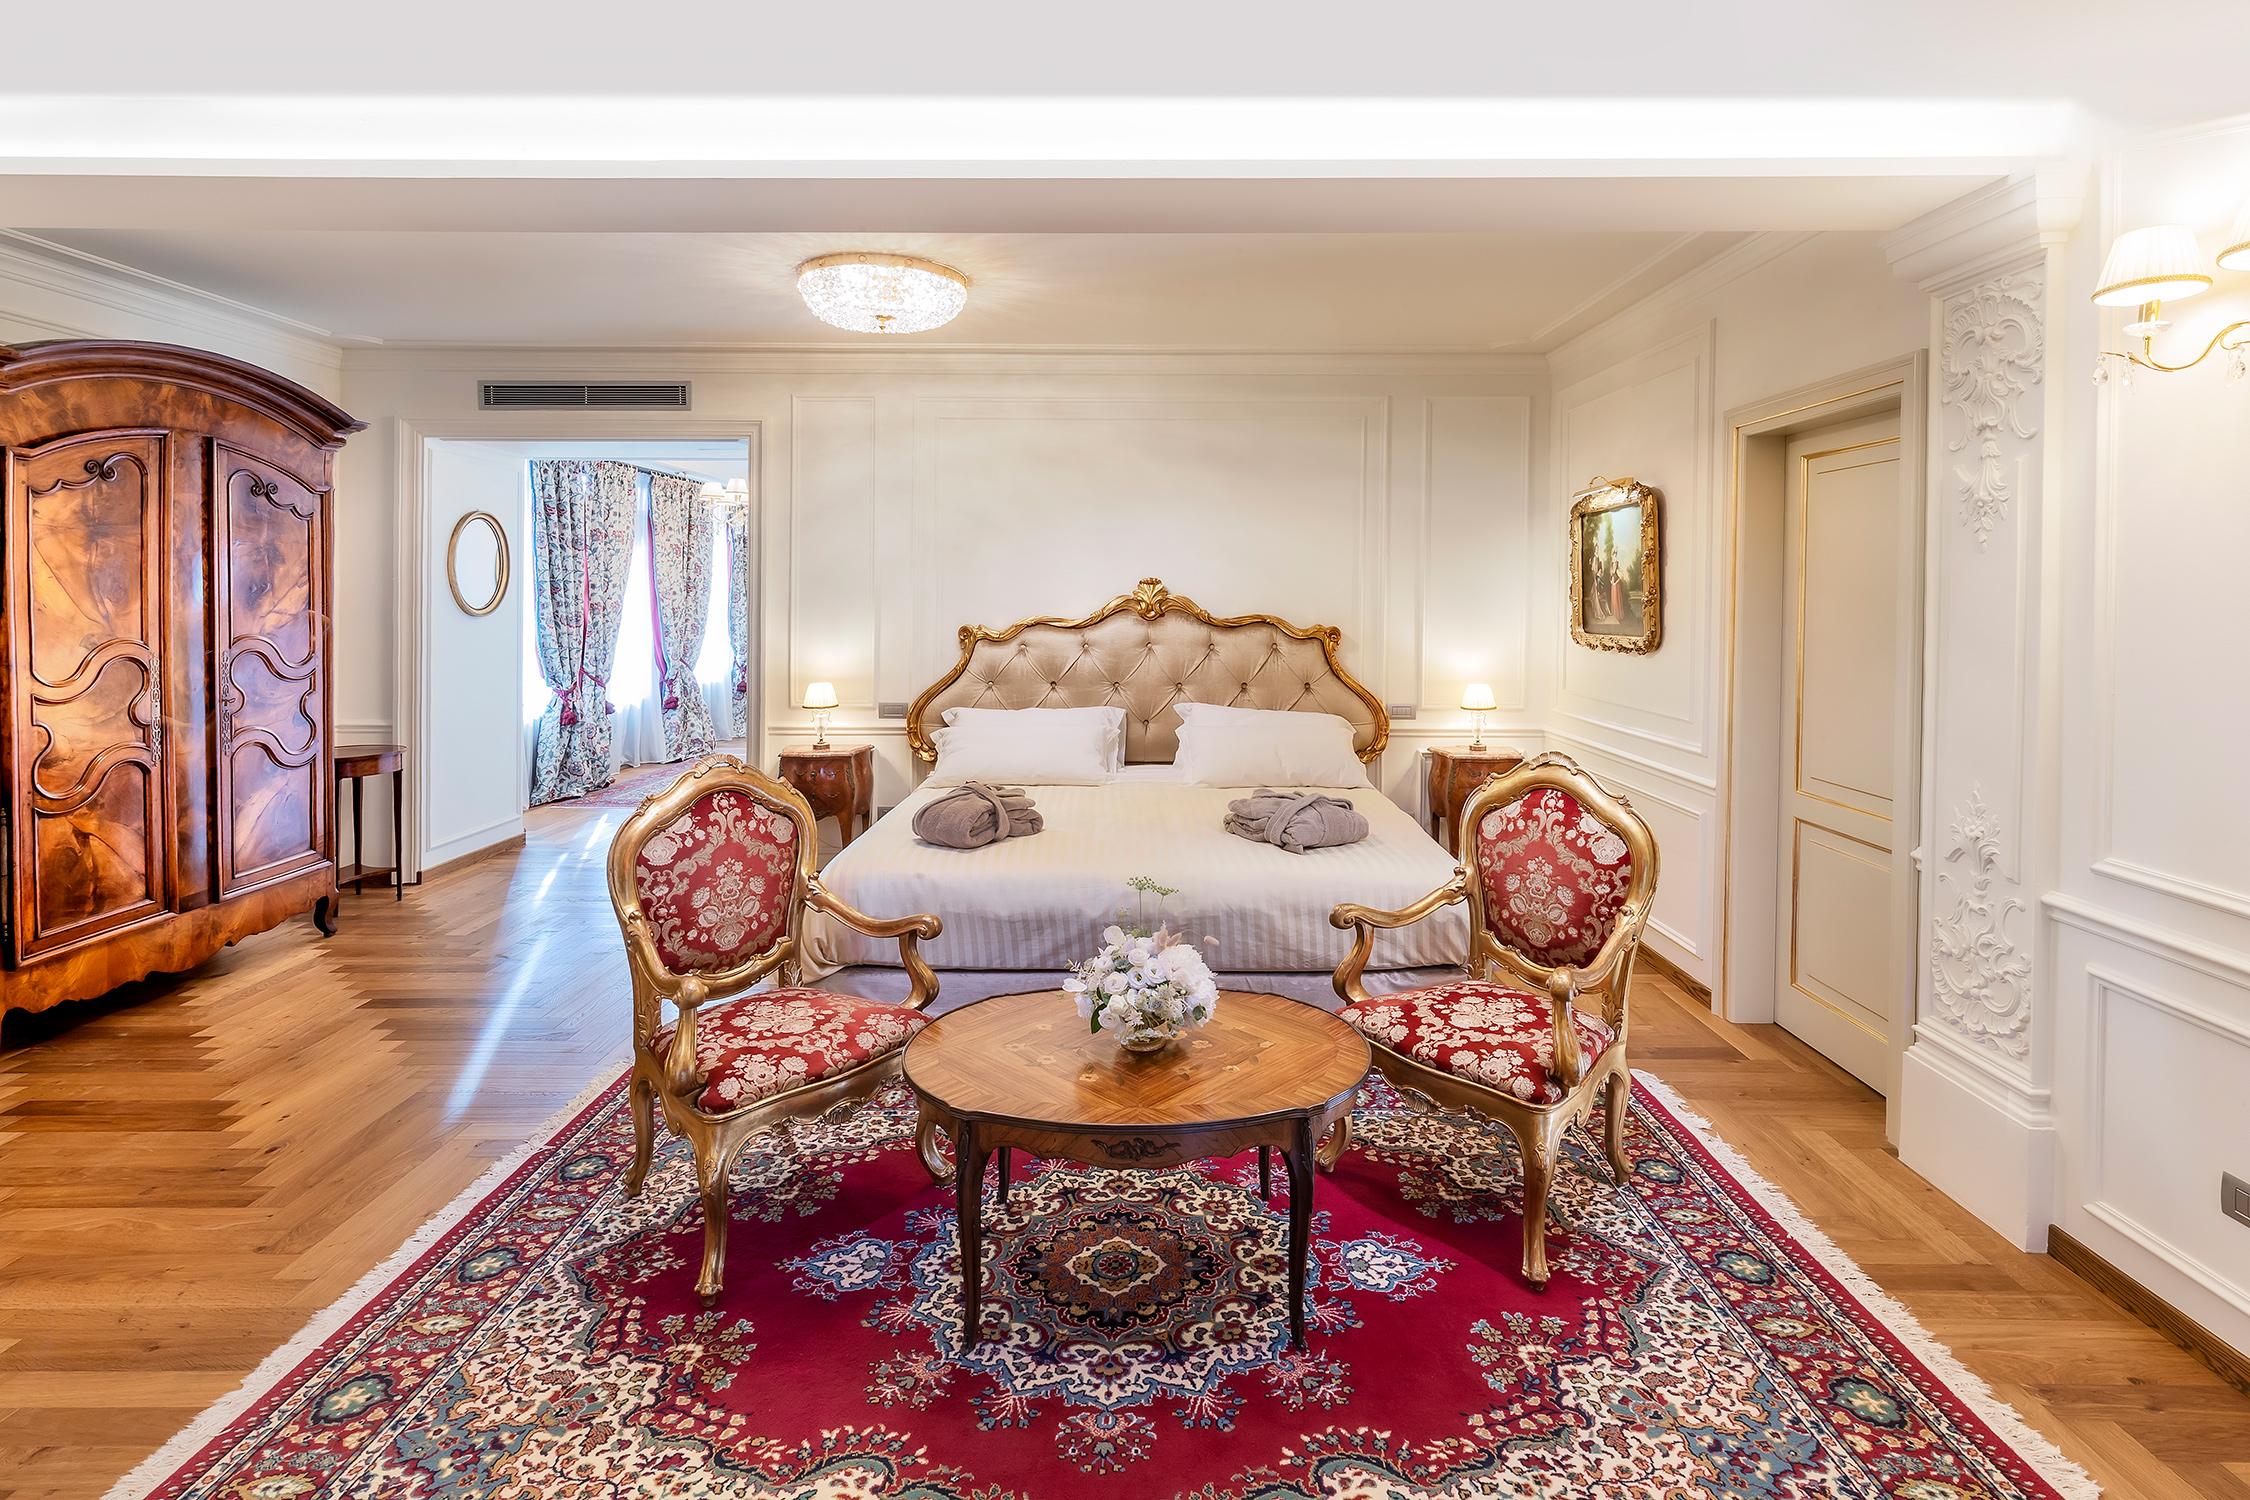 Villa Valentini Bonaparte, elegant Suites and rooms for holidays between Tuscany & Umbria